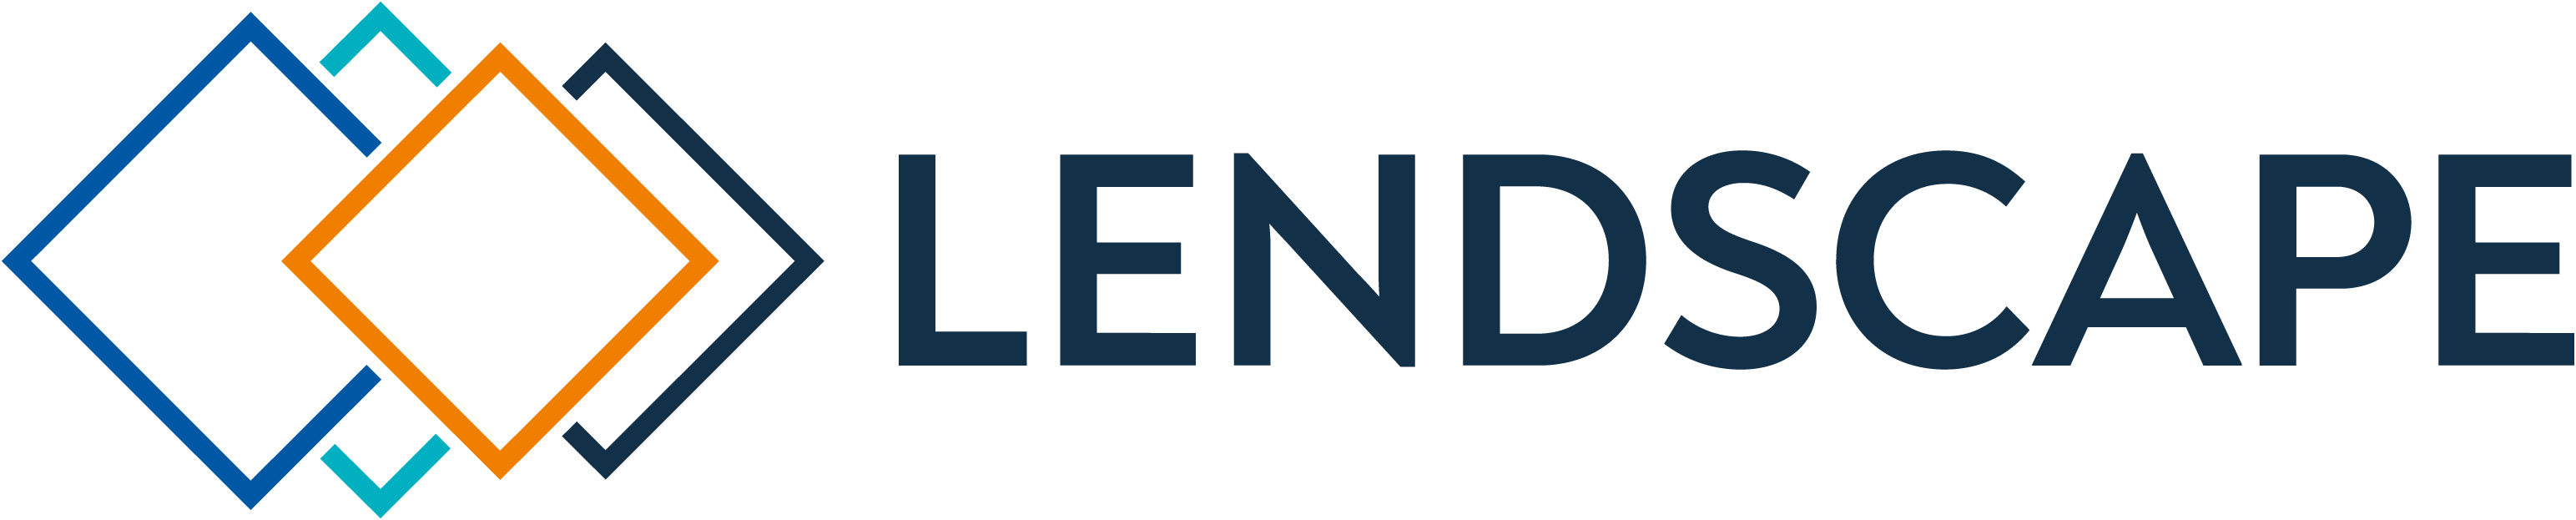 Lendscape logo